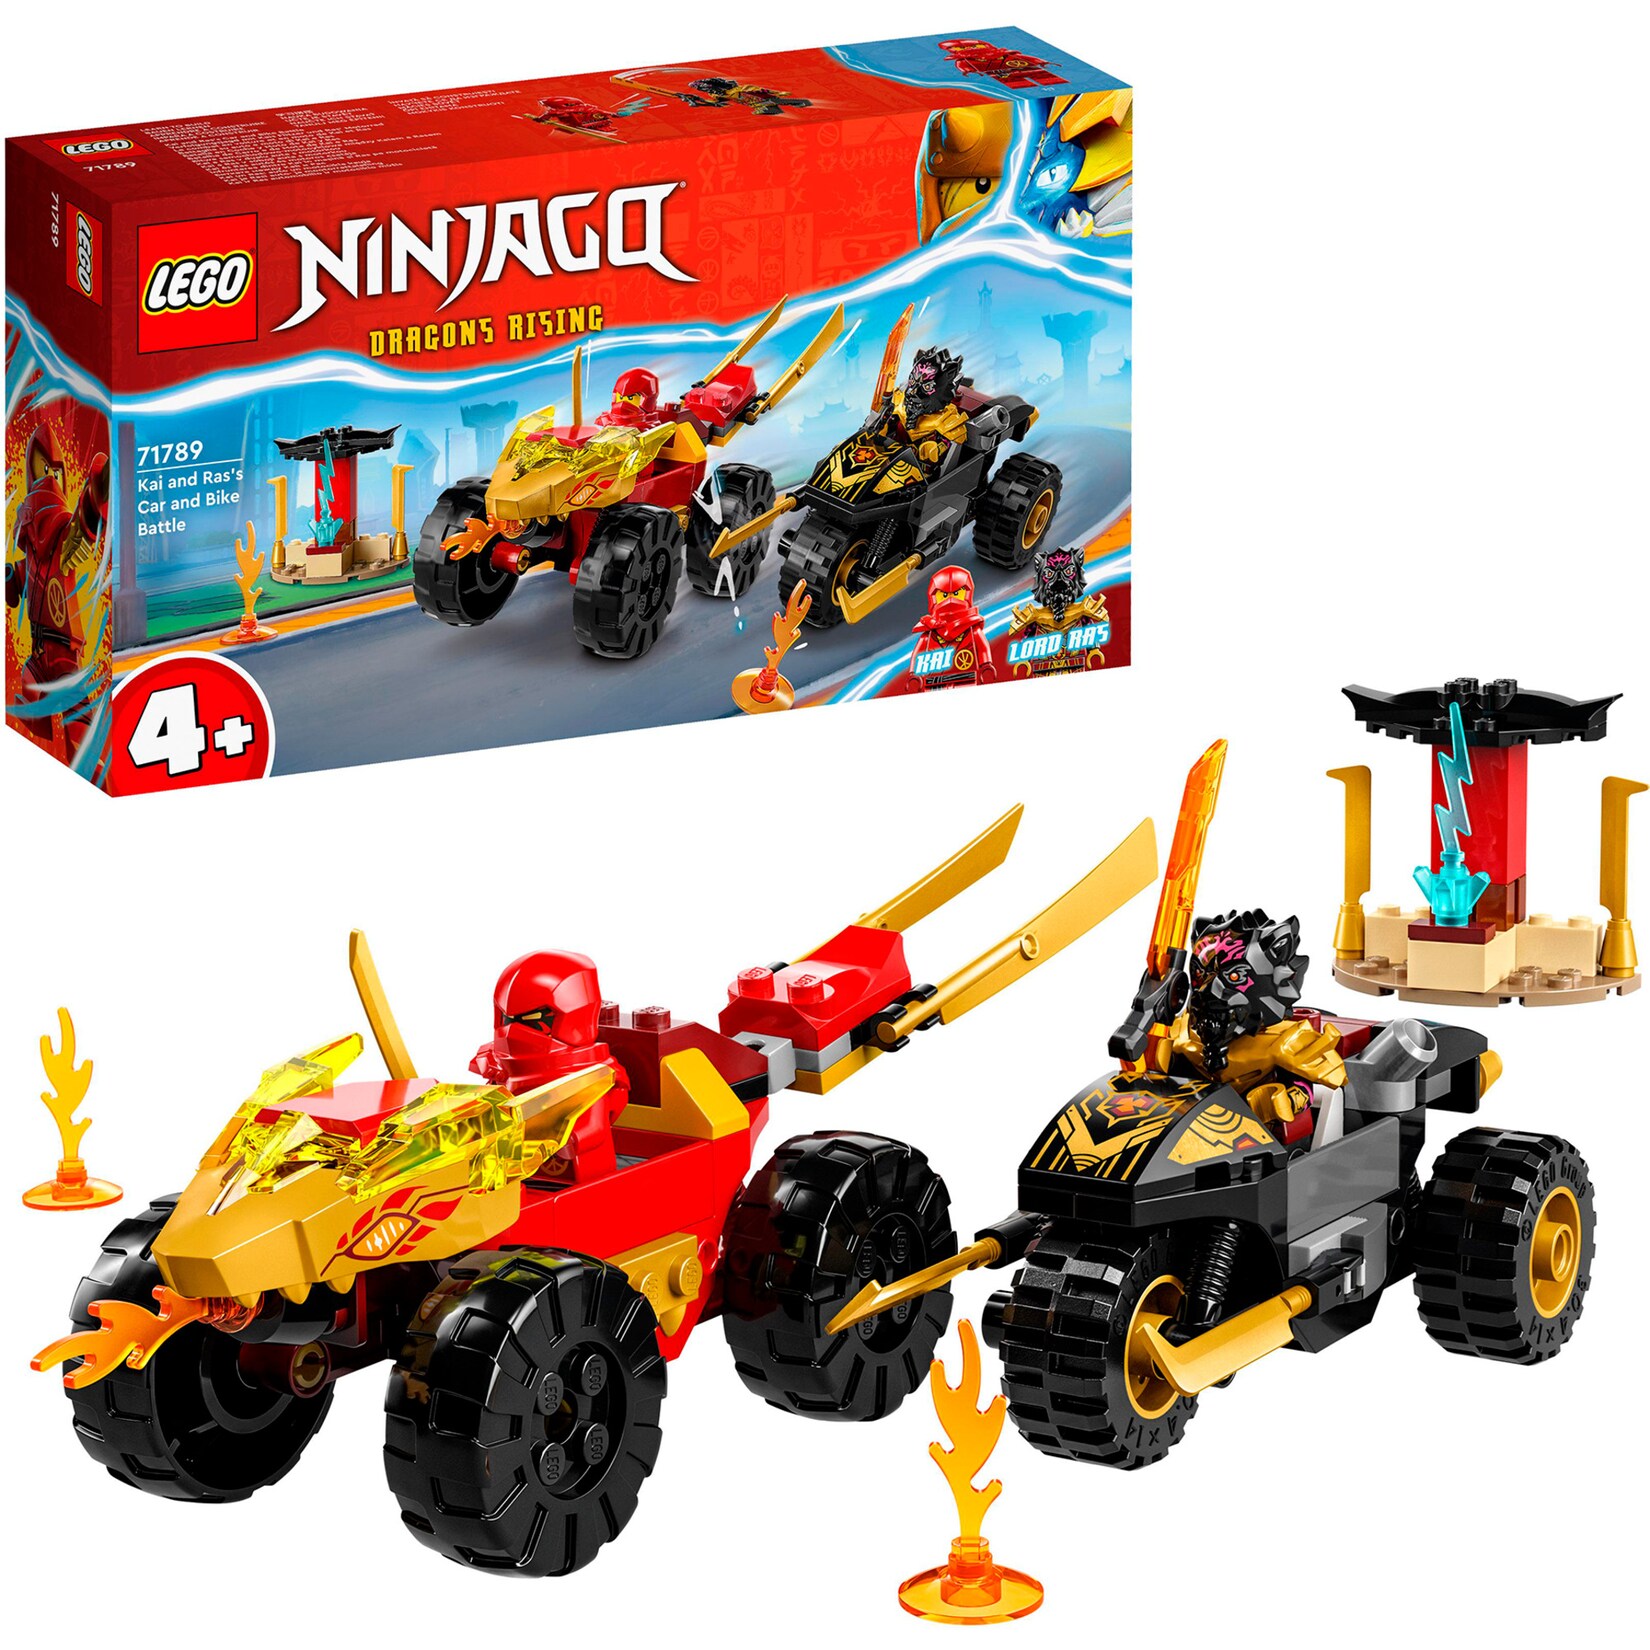 LEGO Konstruktionsspielzeug Ninjago Verfolgungsjagd mit Kais Flitzer und Ras' Motorrad